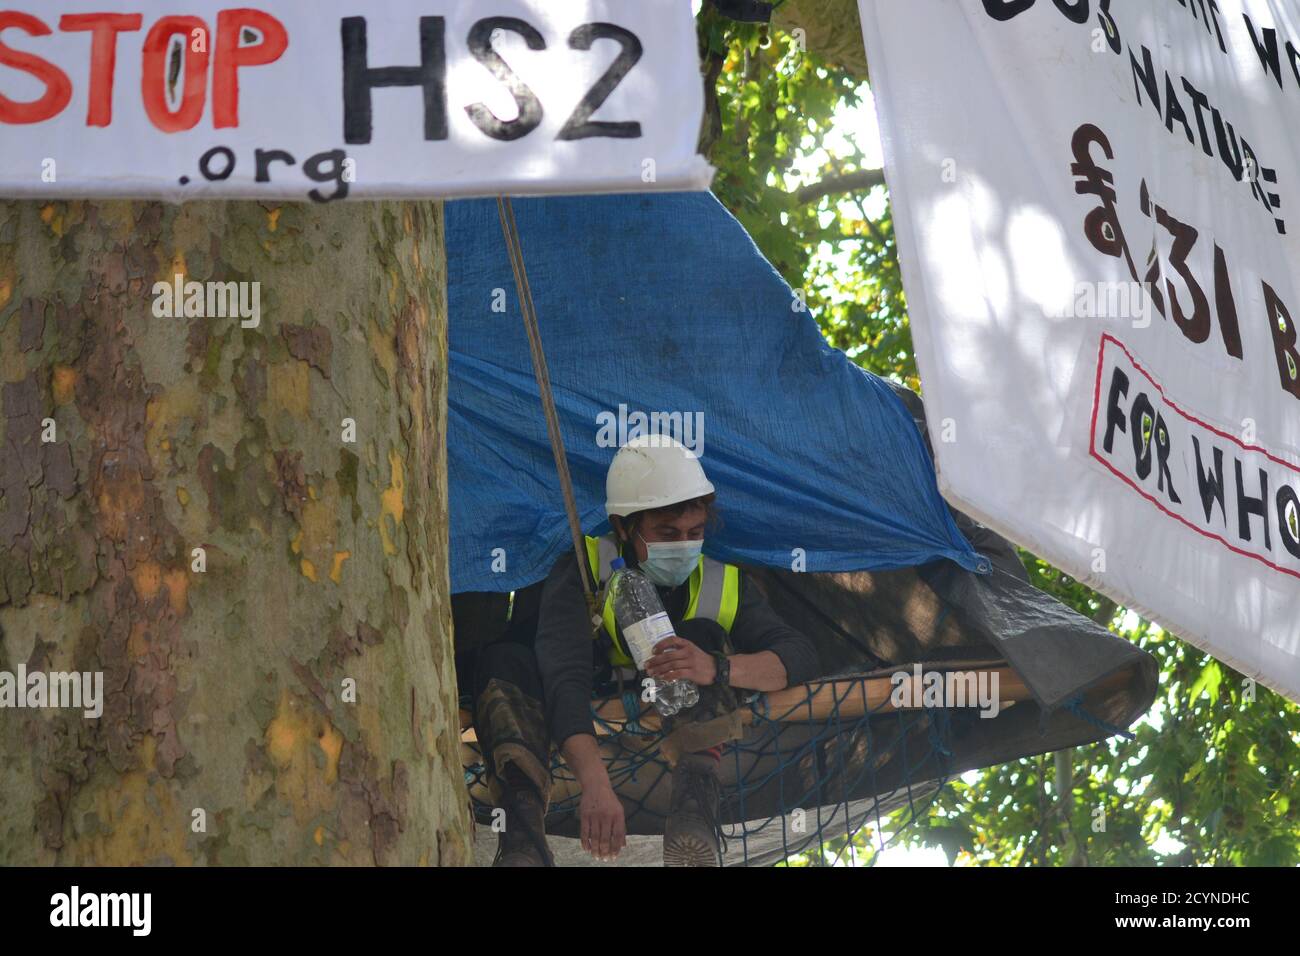 Anti-HS2 high speed rail protestors in Leamington Spa Stock Photo